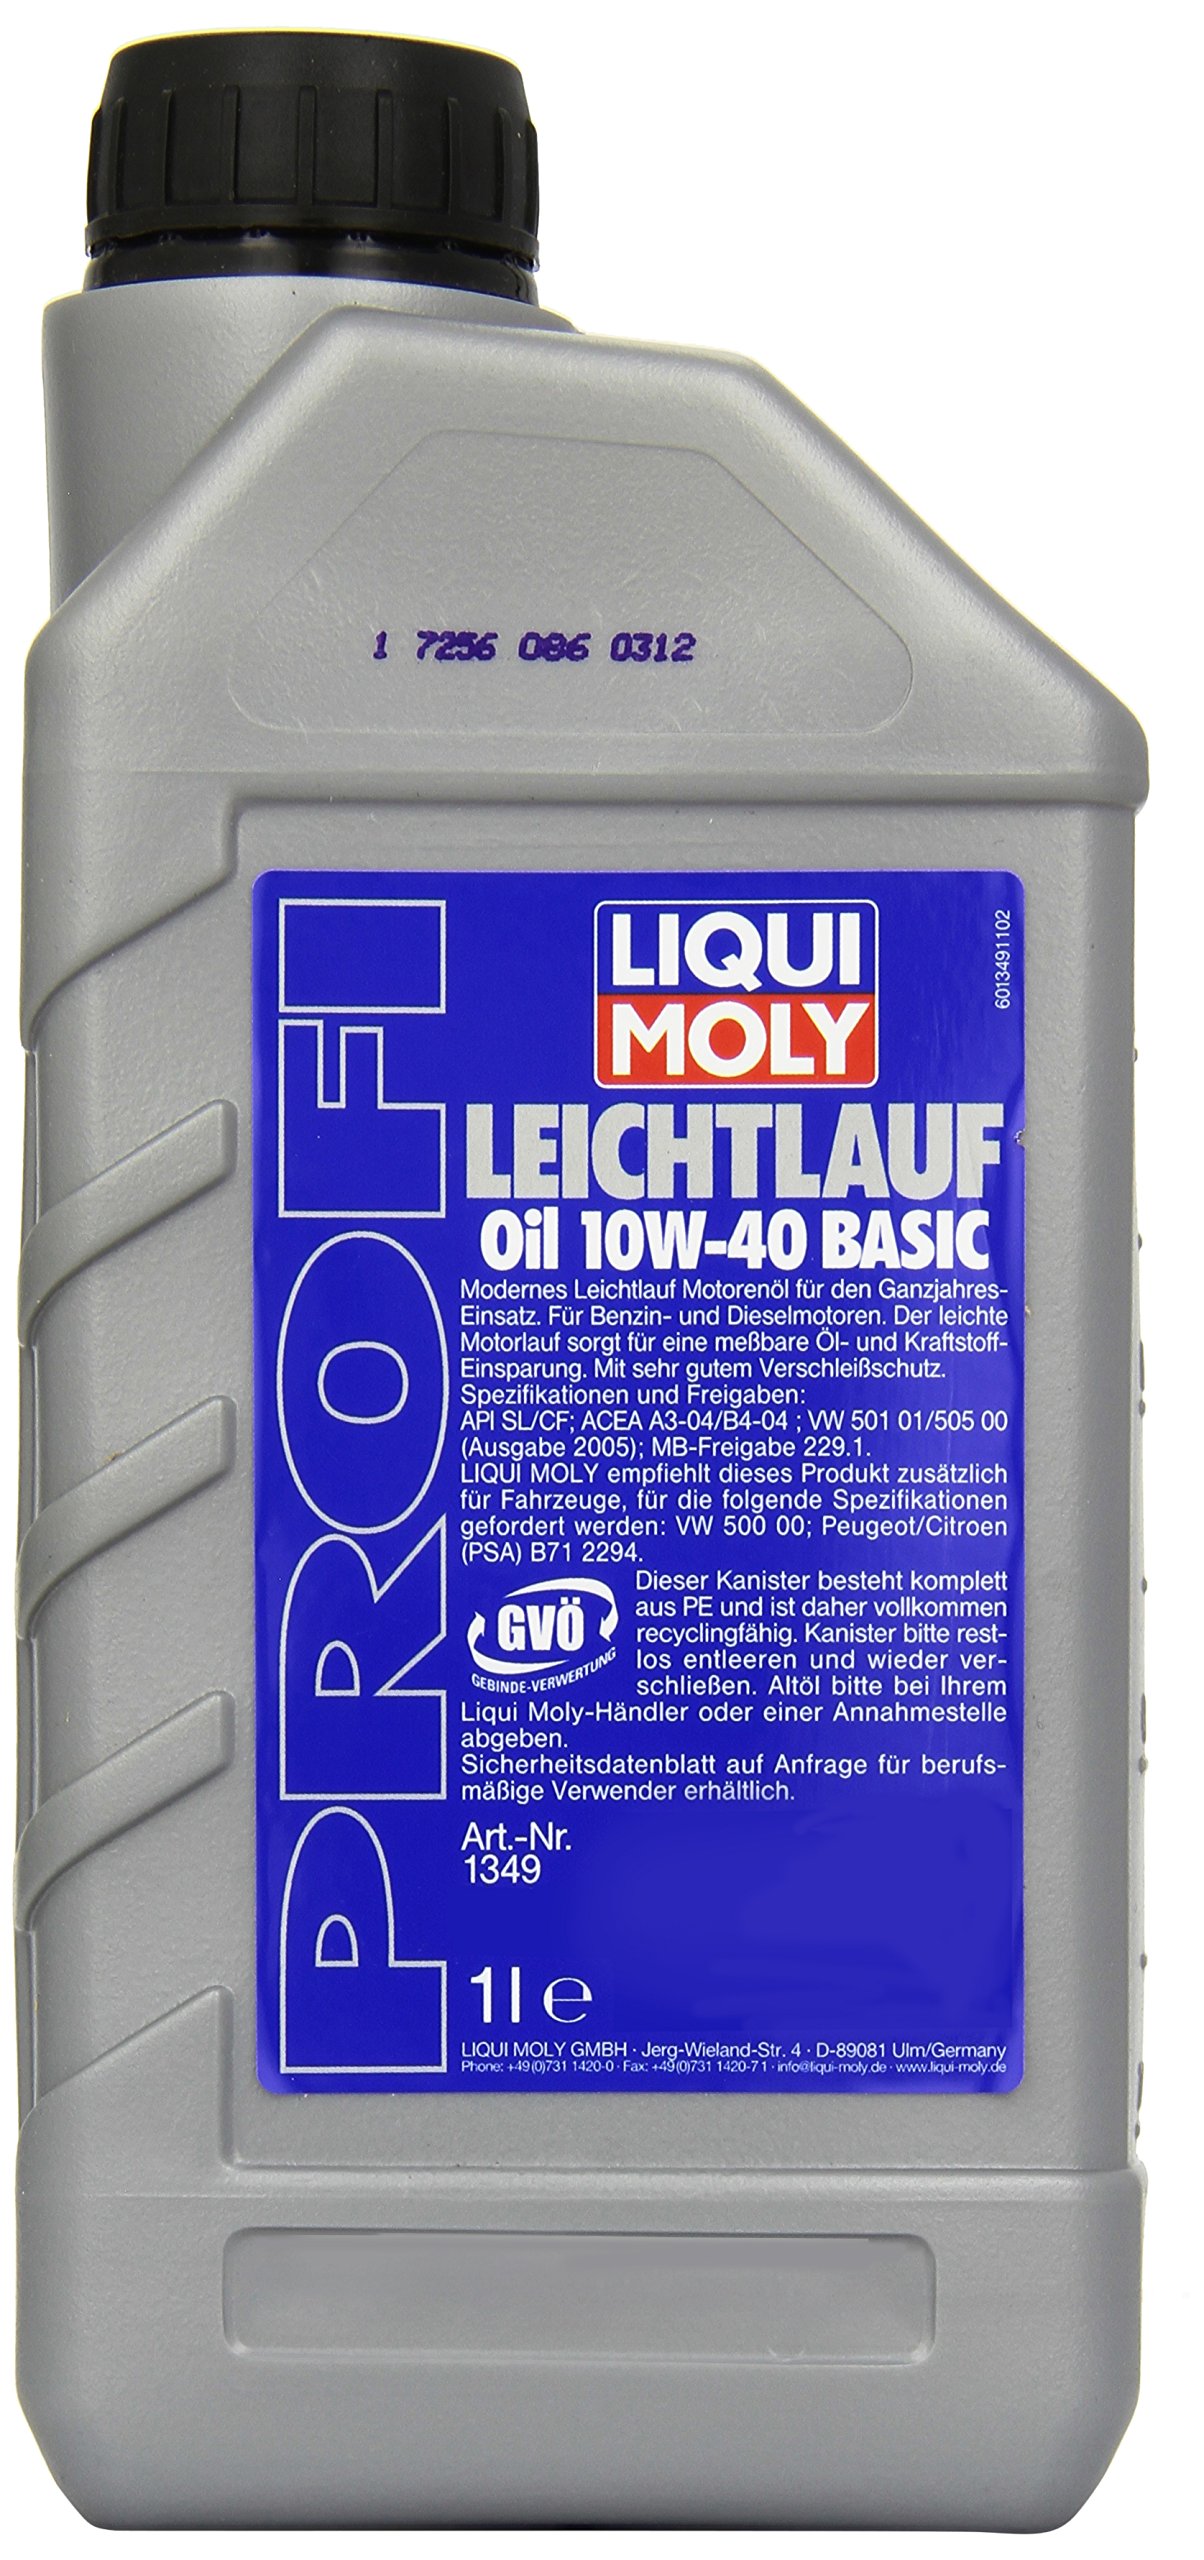 LIQUI MOLY Profi Leichtlauf 10W-40 Basic | 1 L | Synthesetechnologie Motoröl | Art.-Nr.: 1349 von Liqui Moly